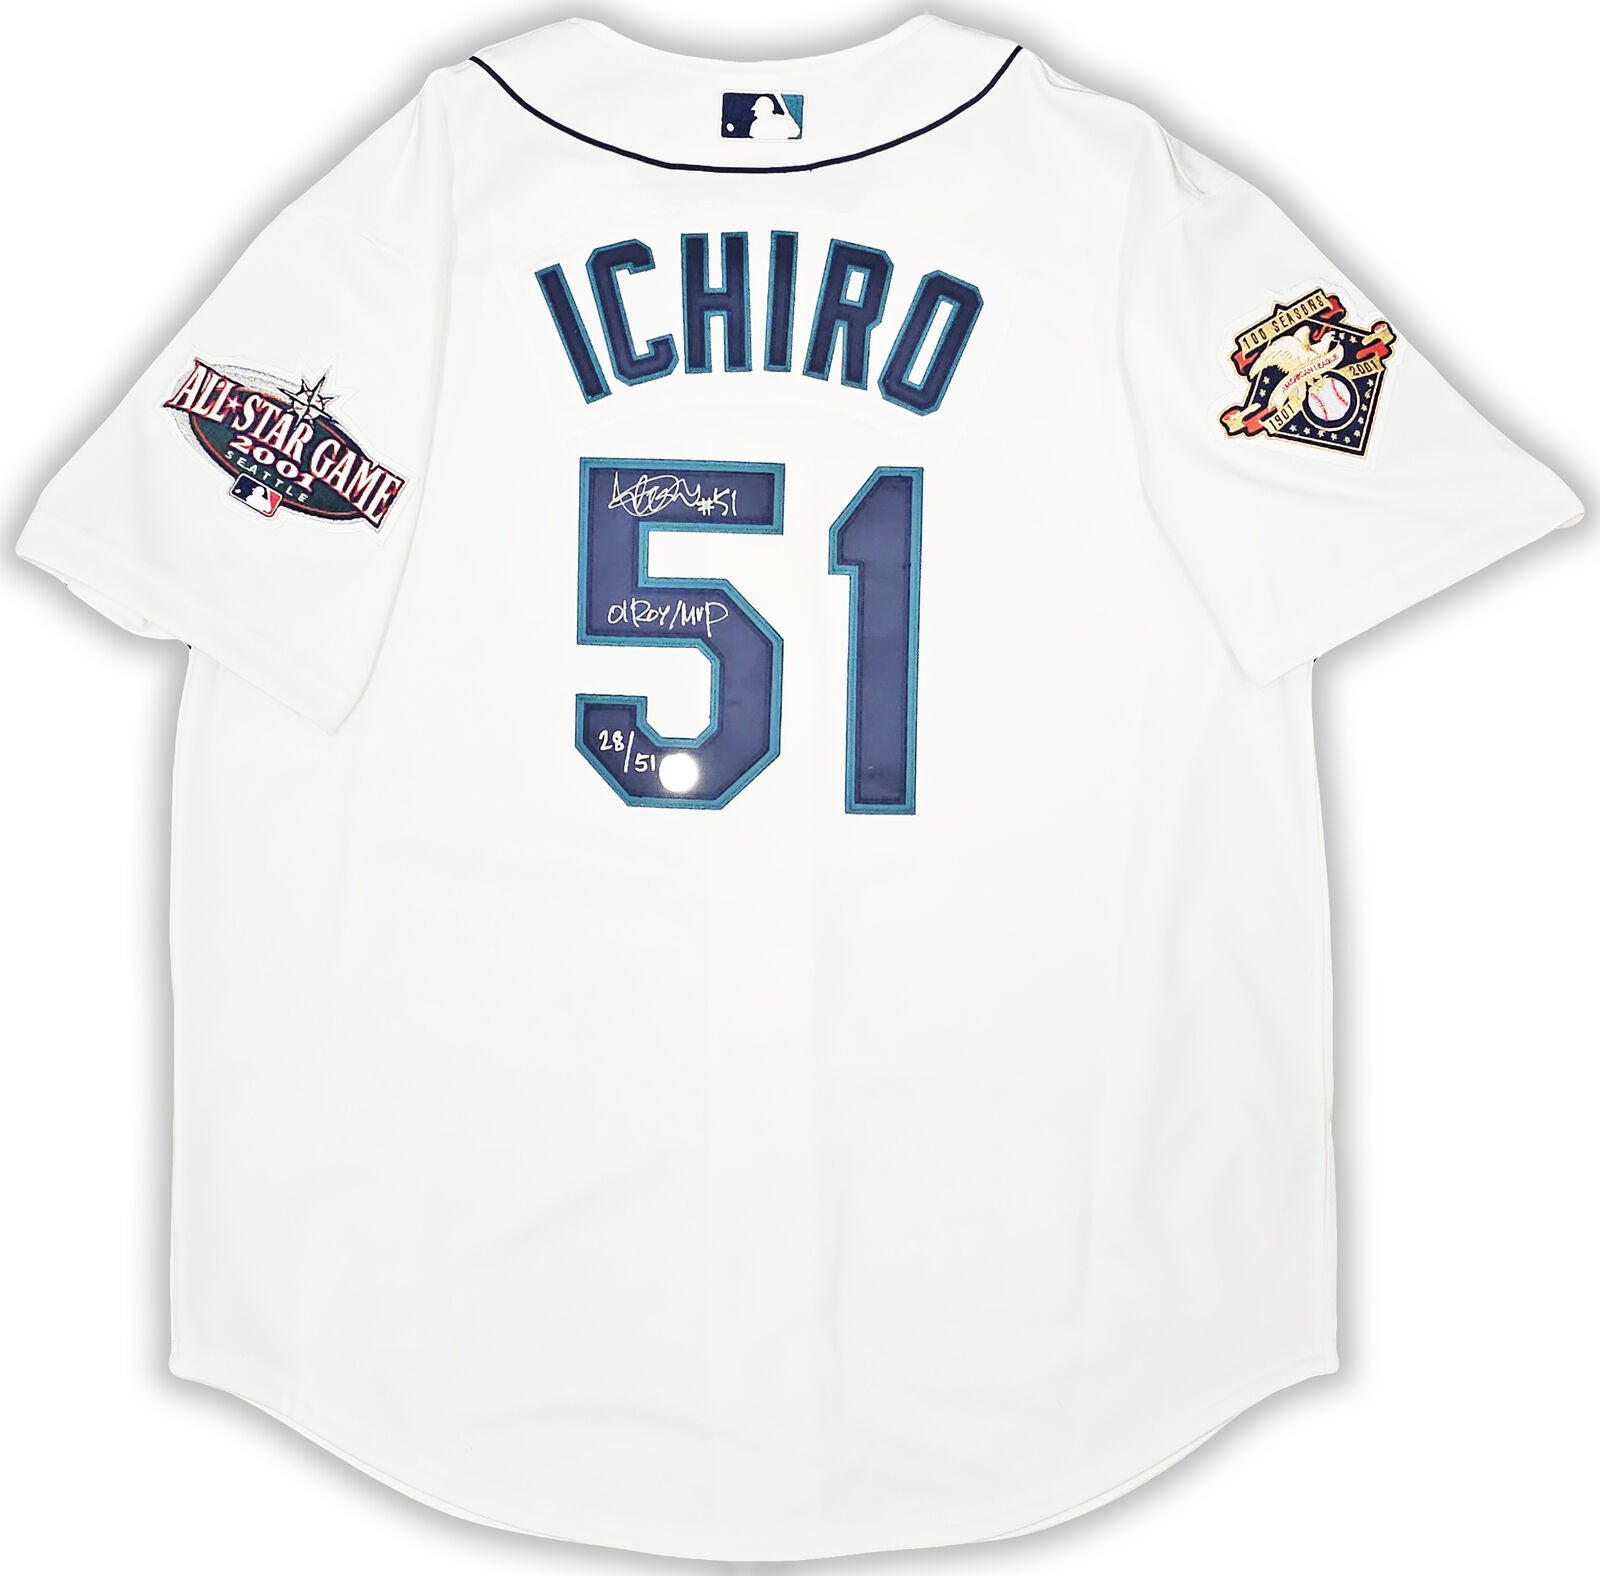 Ichiro autographed all star jersey Seattle mariner